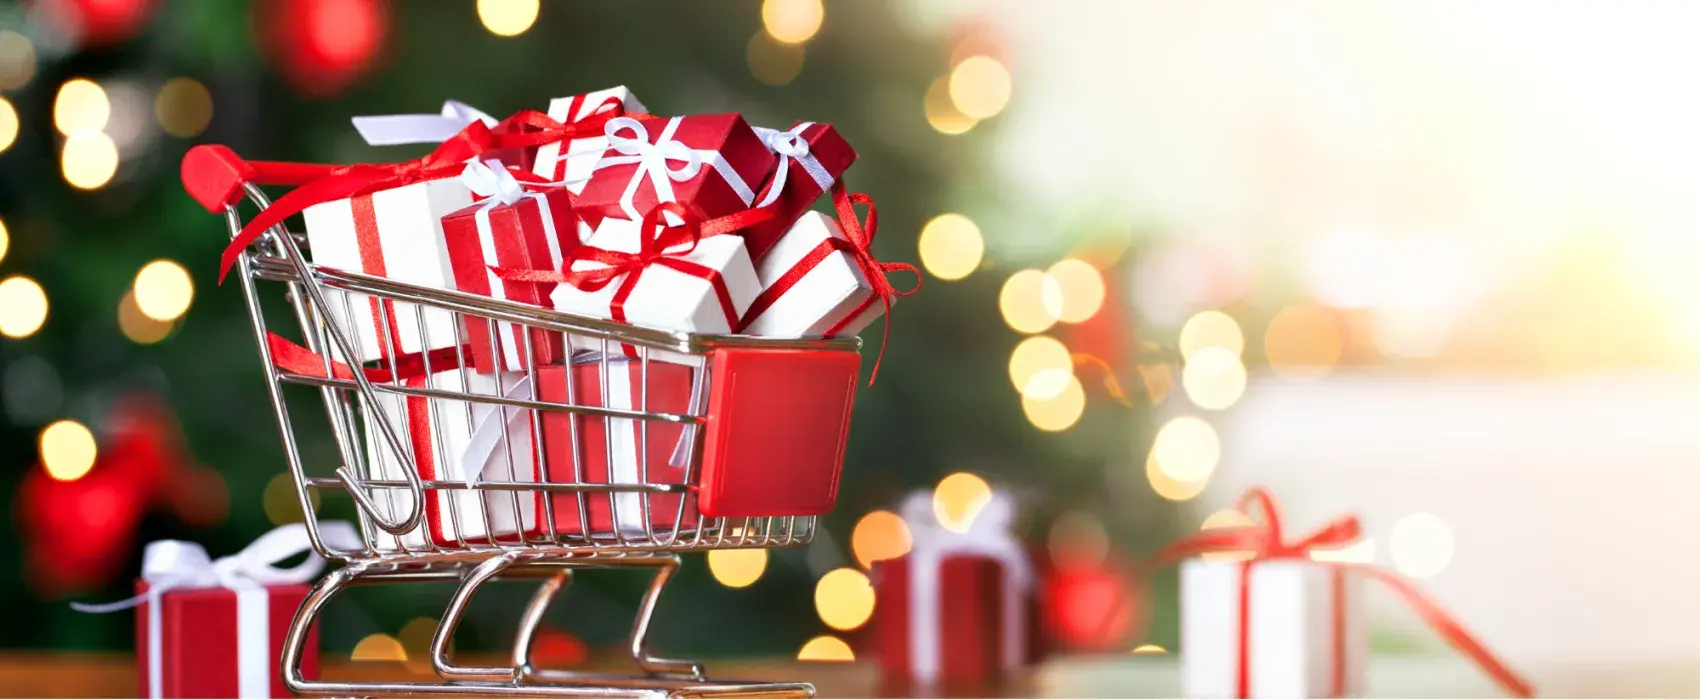 Christmas shopping trolley